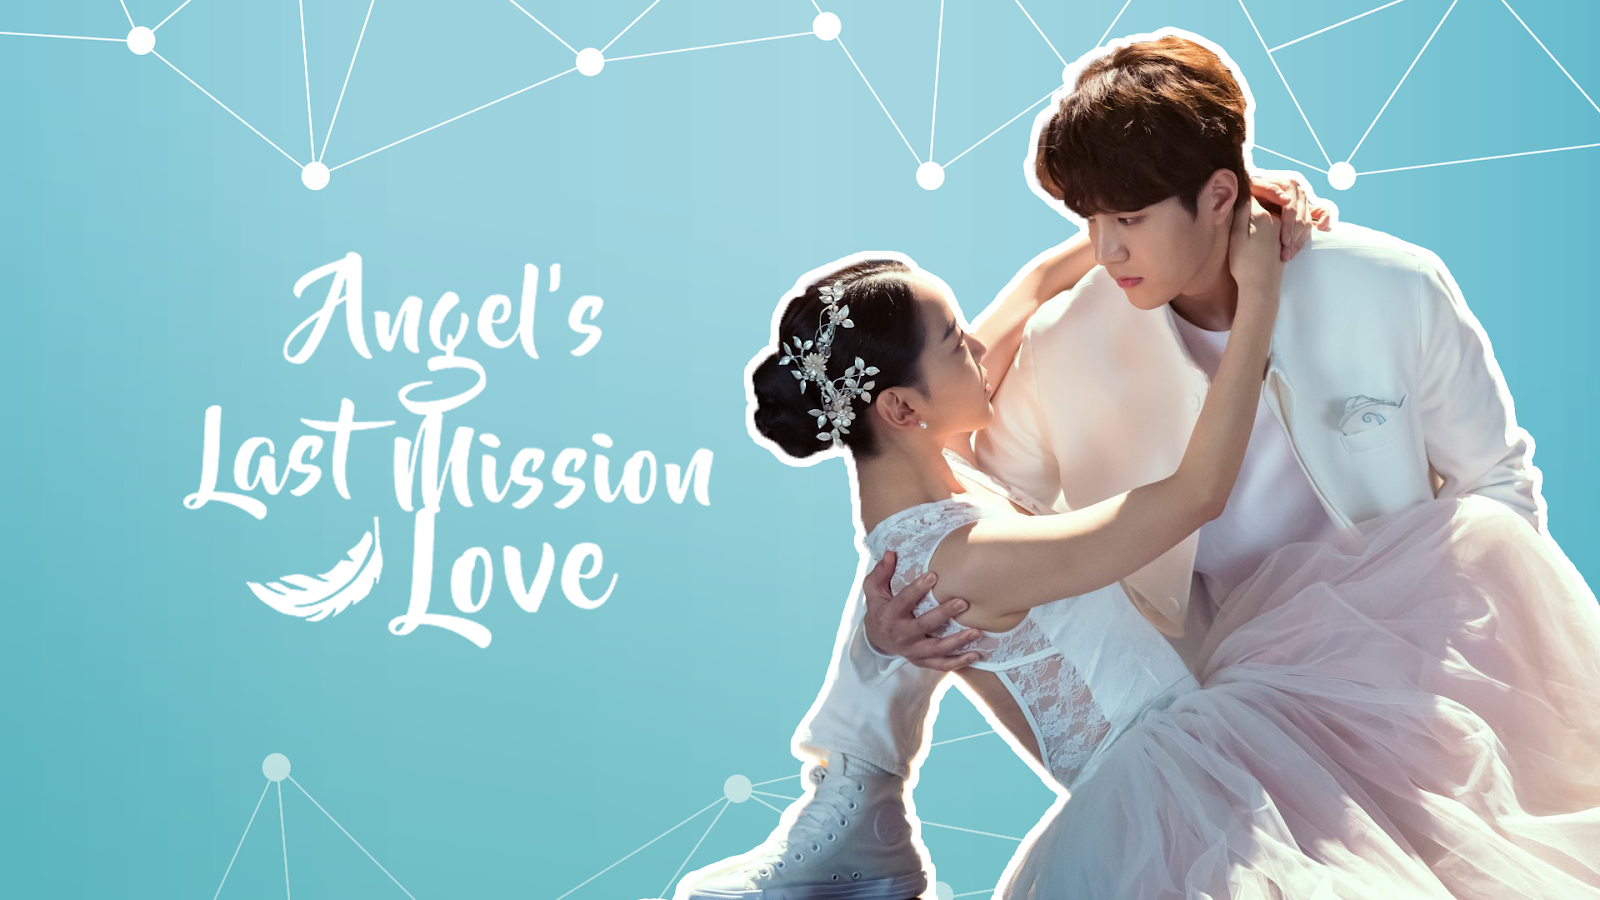 Angel s love. Angel's last Mission: Love Napkin. Angel's last Mission: Love Napkin piece. The President's last Love. Angel's last Mission: Love Napkin pice.